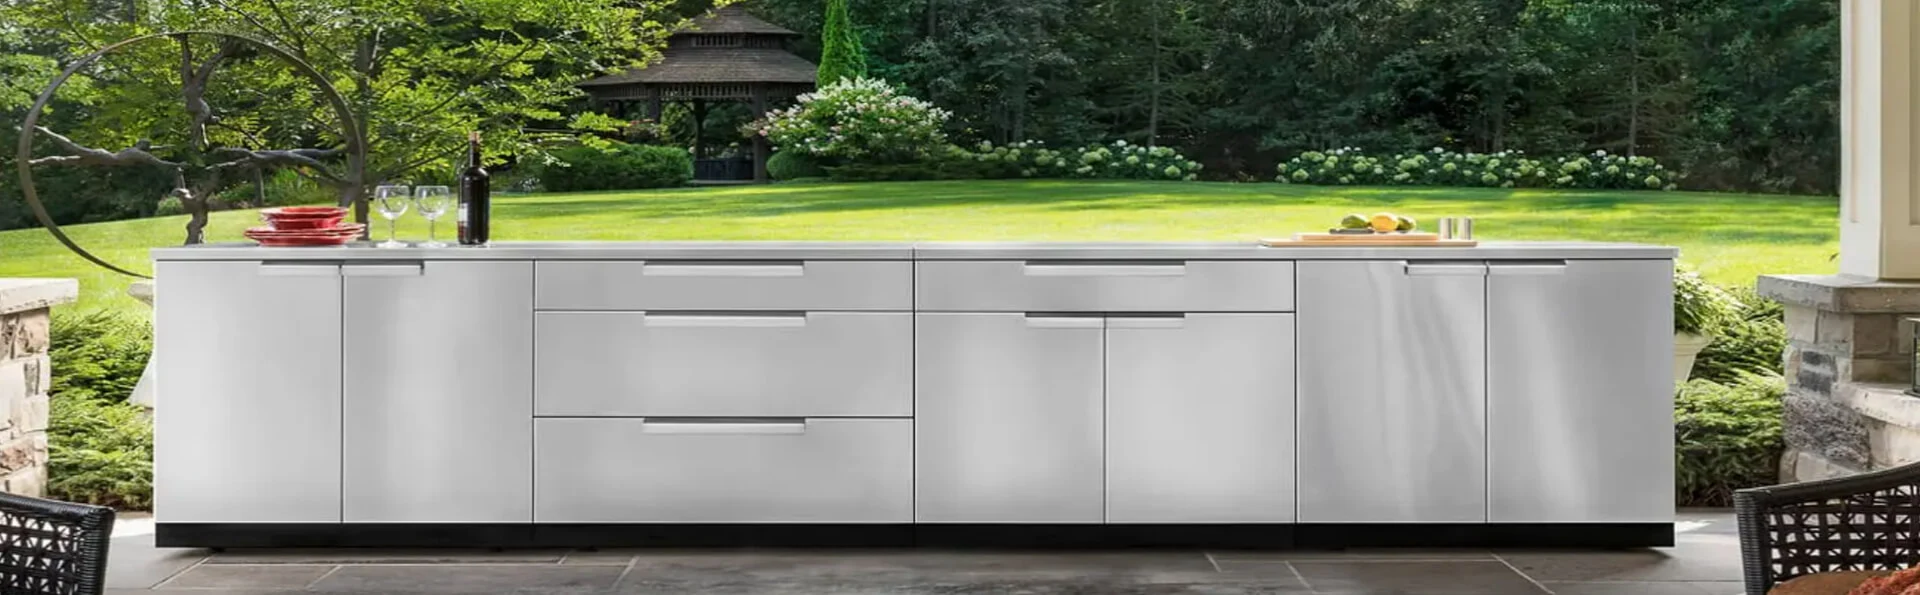 Outdoor Stainless Steel Kitchen Cabinets Design